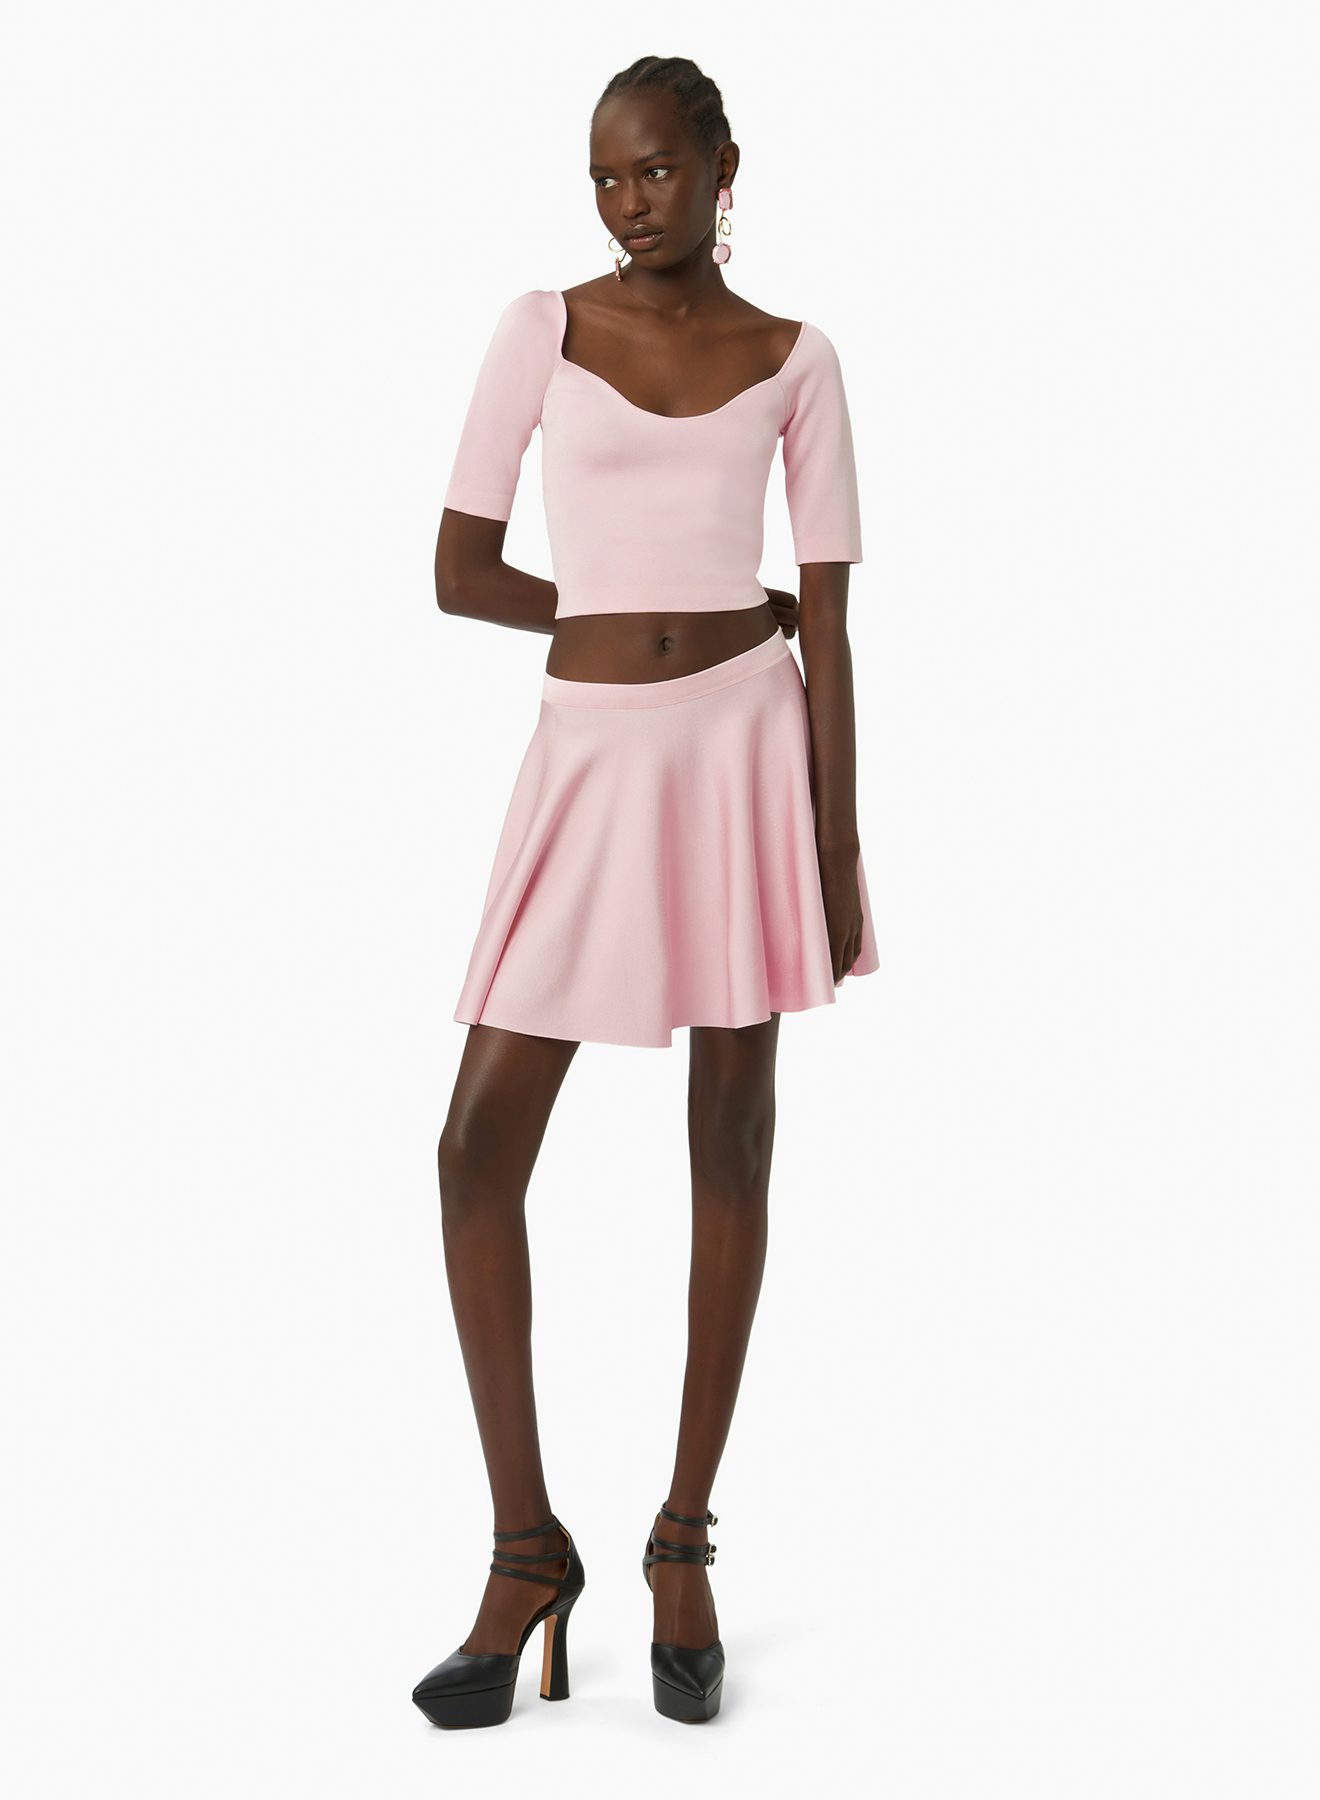 Women's dresses and skirts - Fashion - Nina Ricci